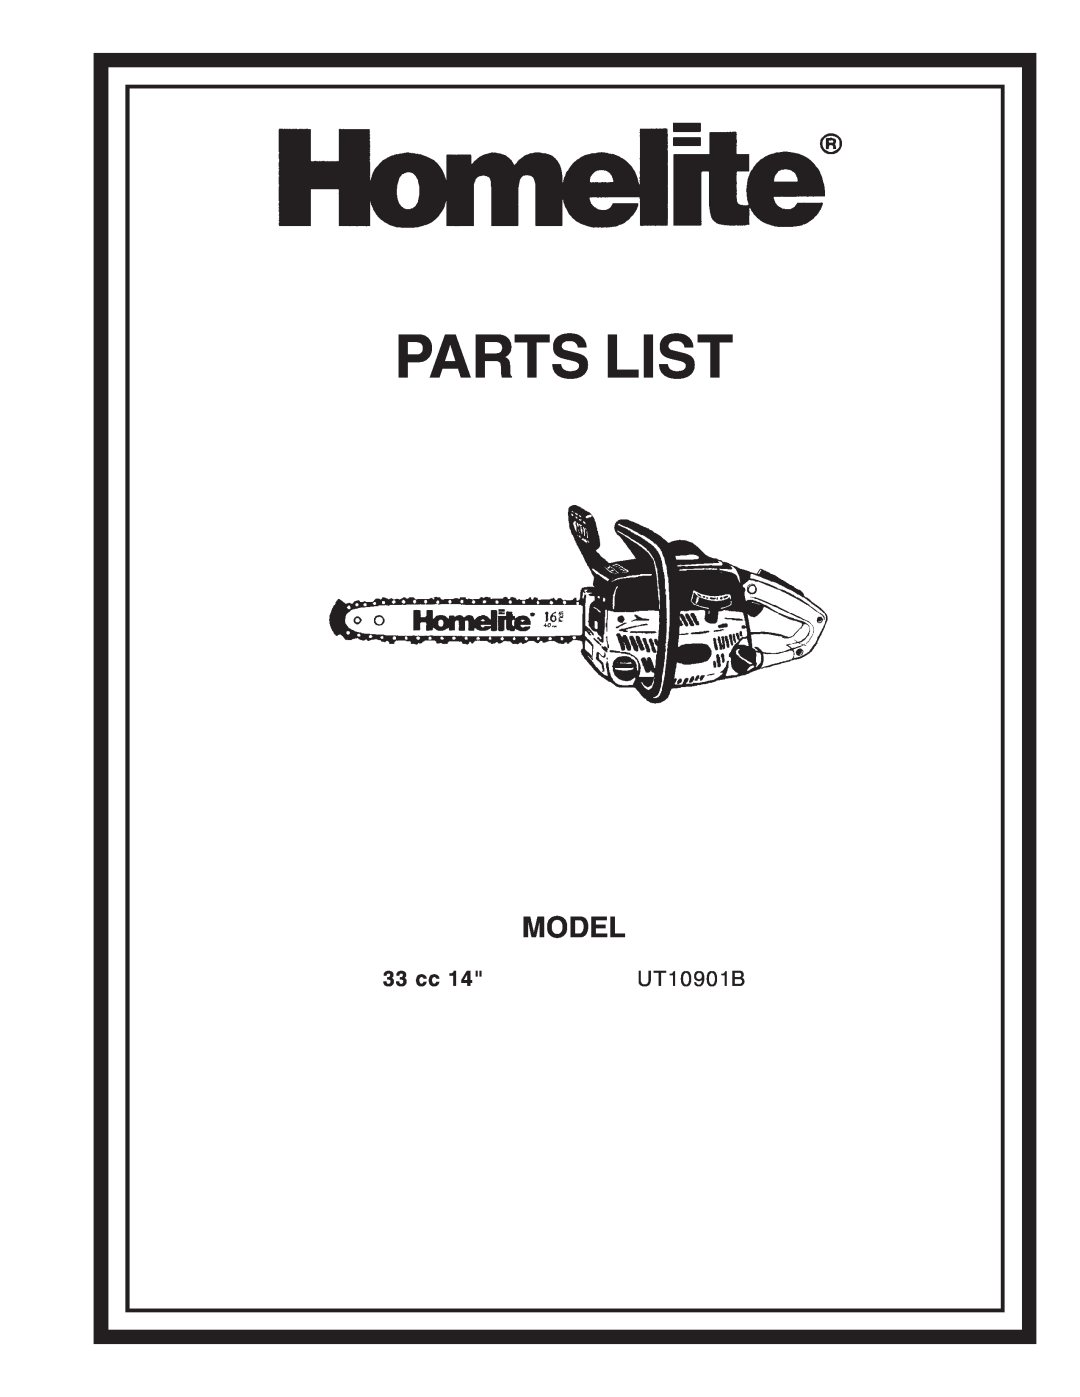 Homelite UT10901B manual Parts List, Model, 33 cc 